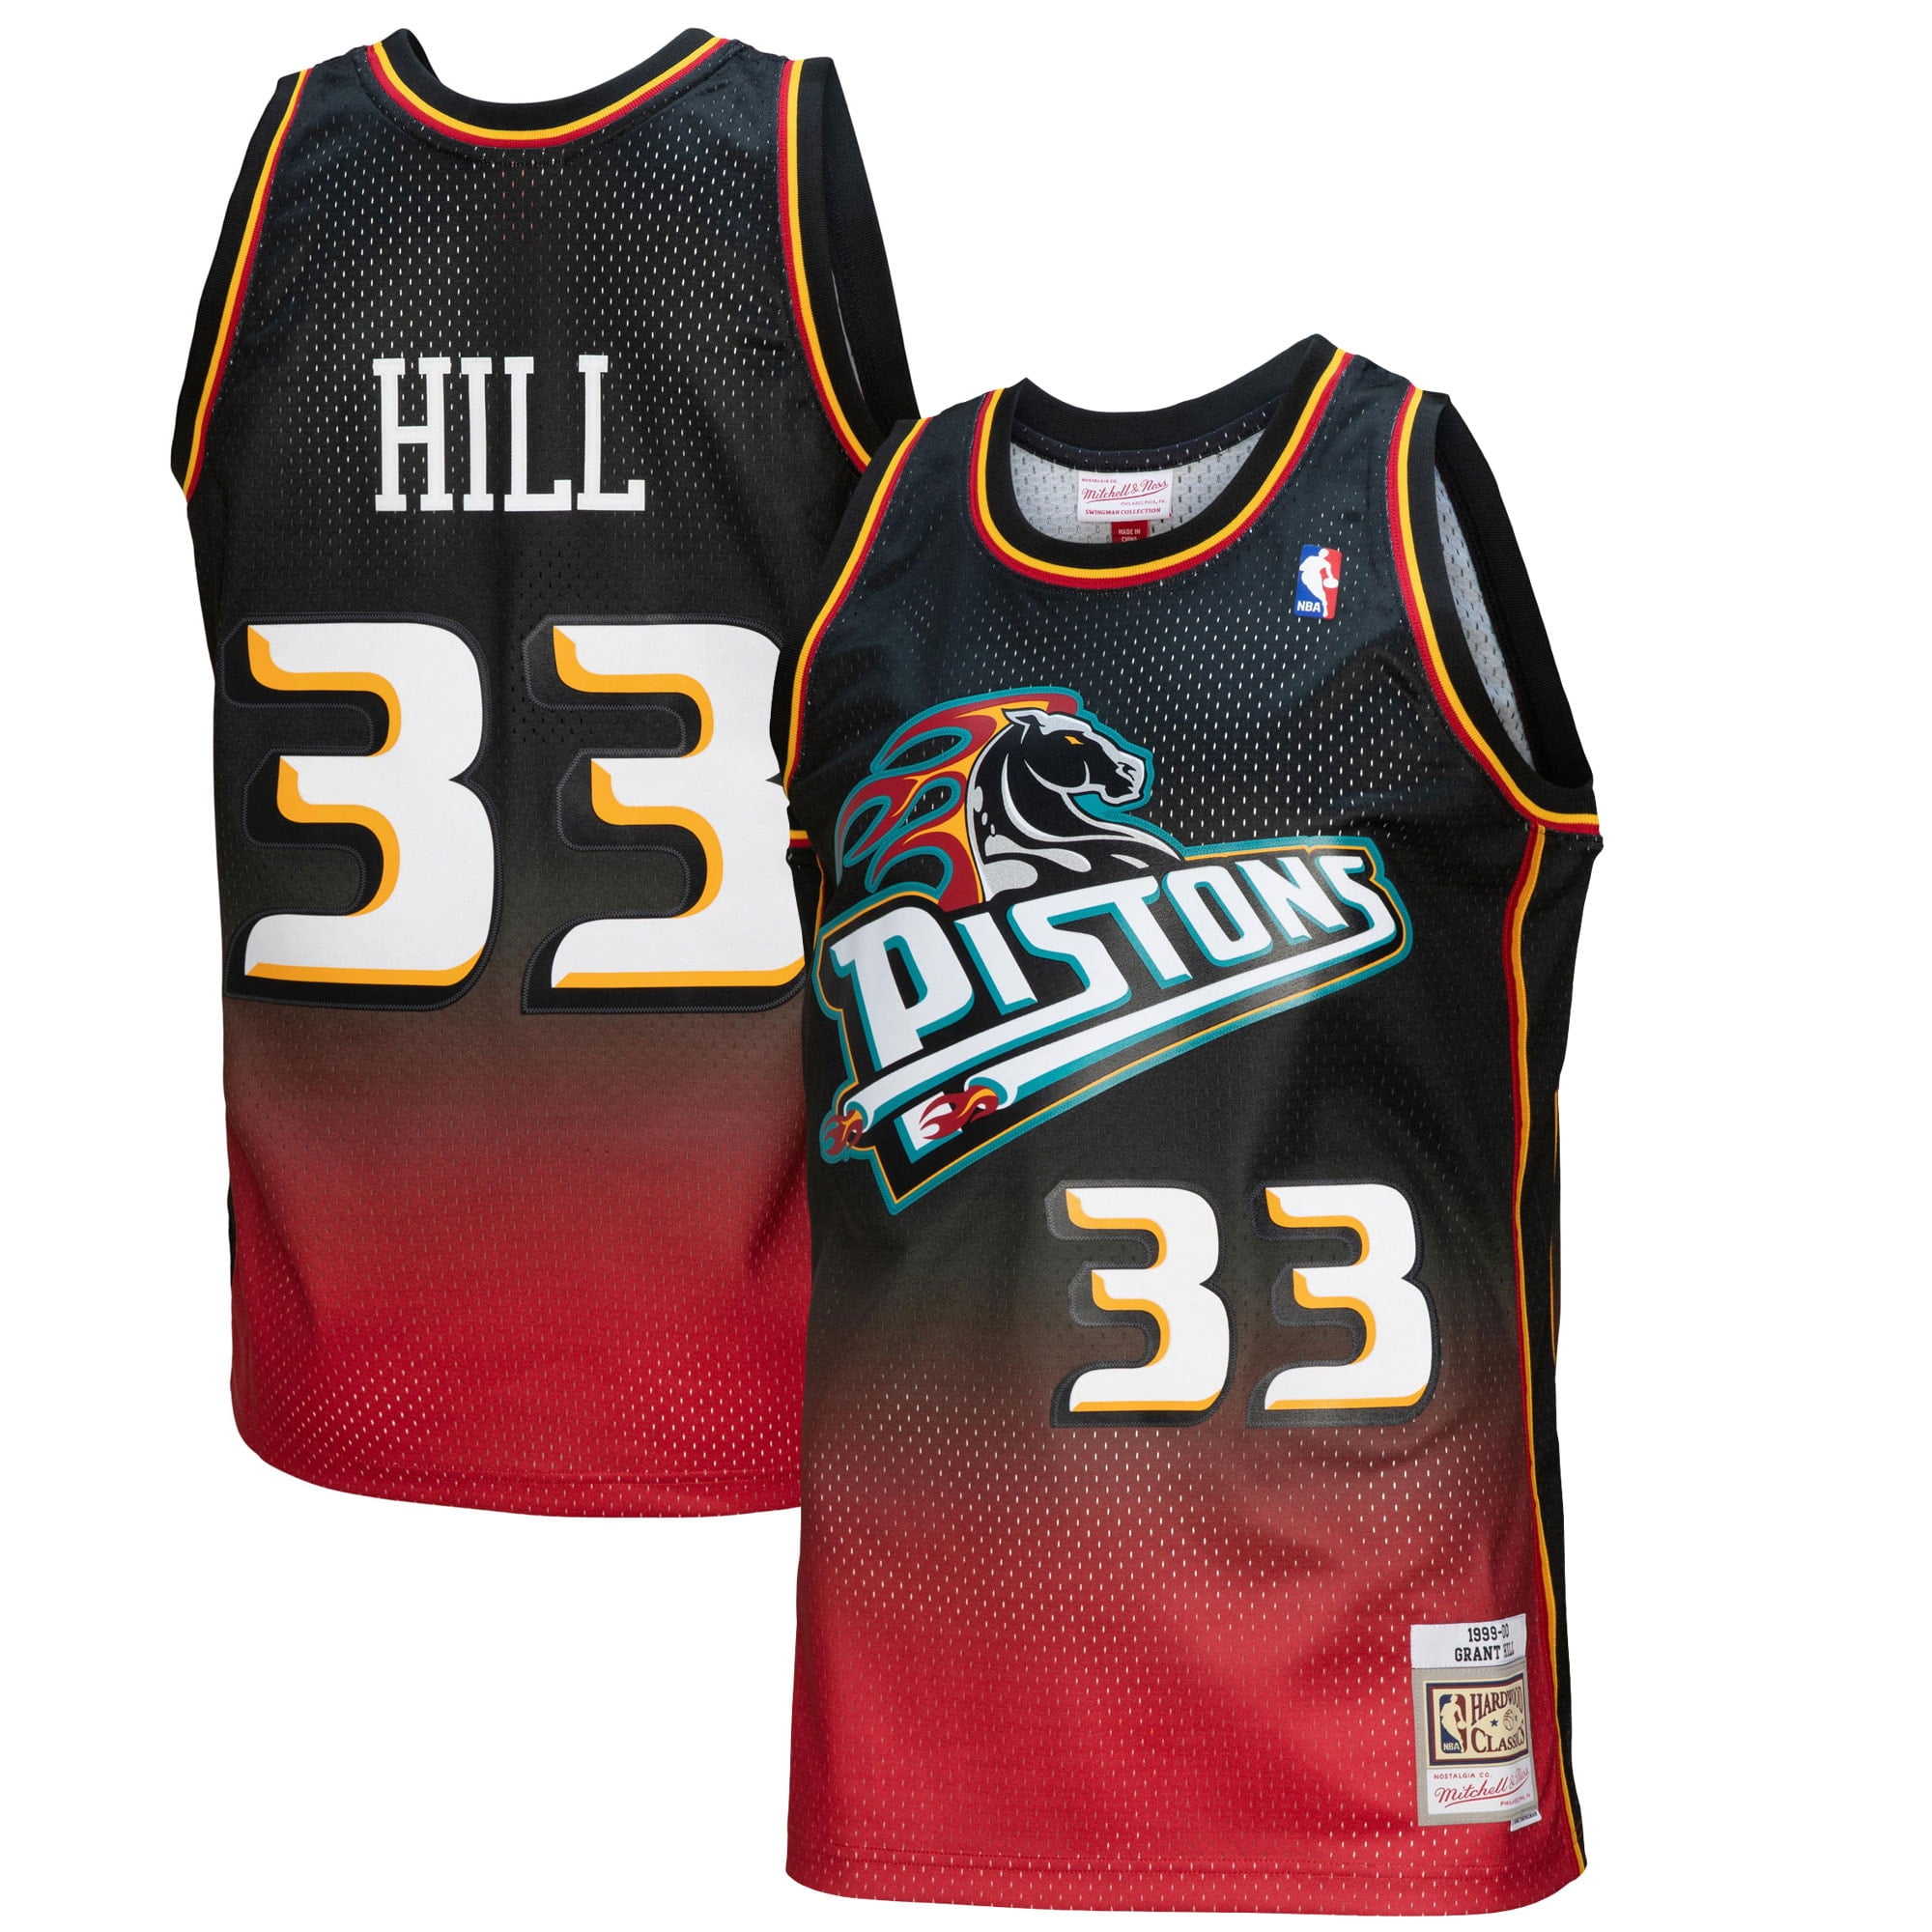 Grant Hill # 33 Detroit Pistons Swingman Basketball Jersey Stitched Green 